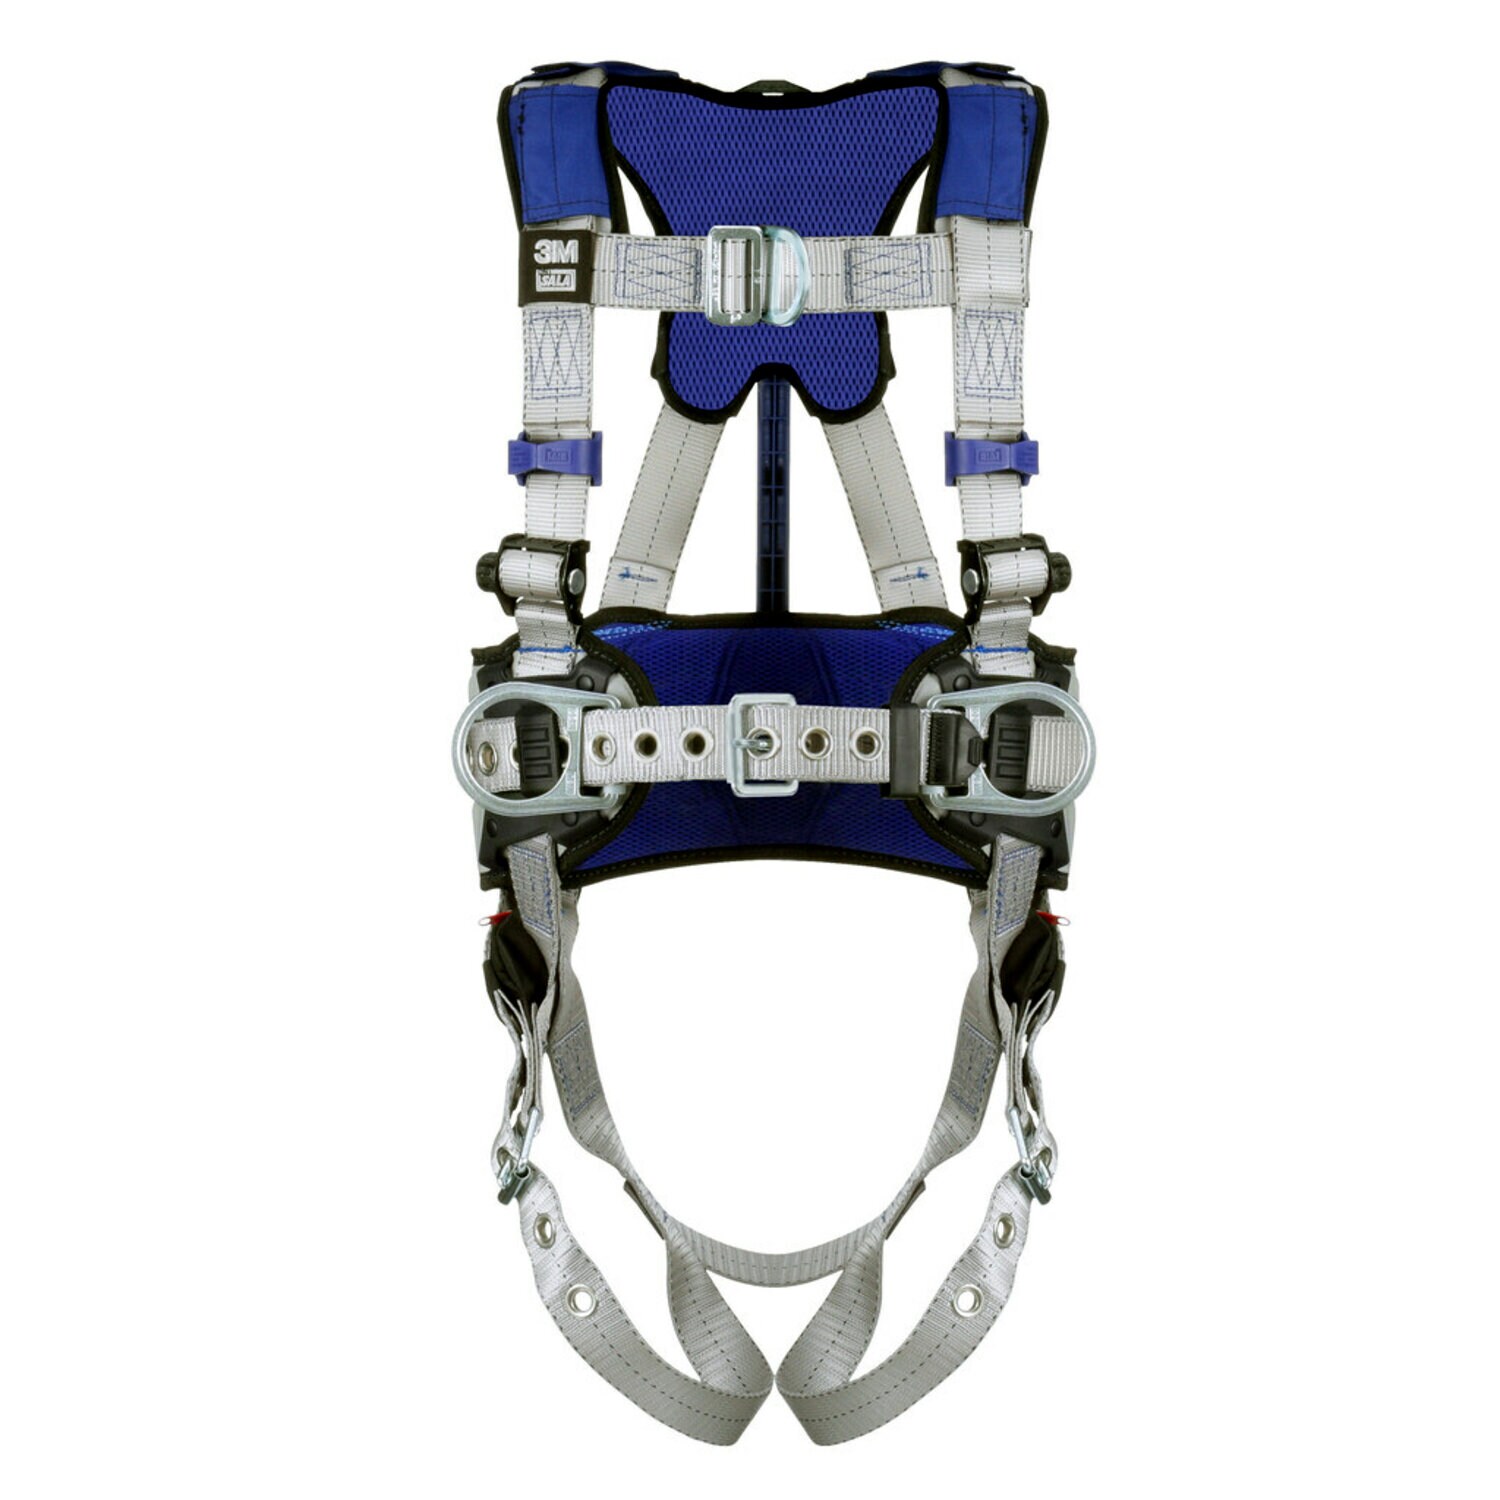 7012817522 - 3M DBI-SALA ExoFit X100 Comfort Construction Climbing/Positioning Safety Harness 1401047, Large